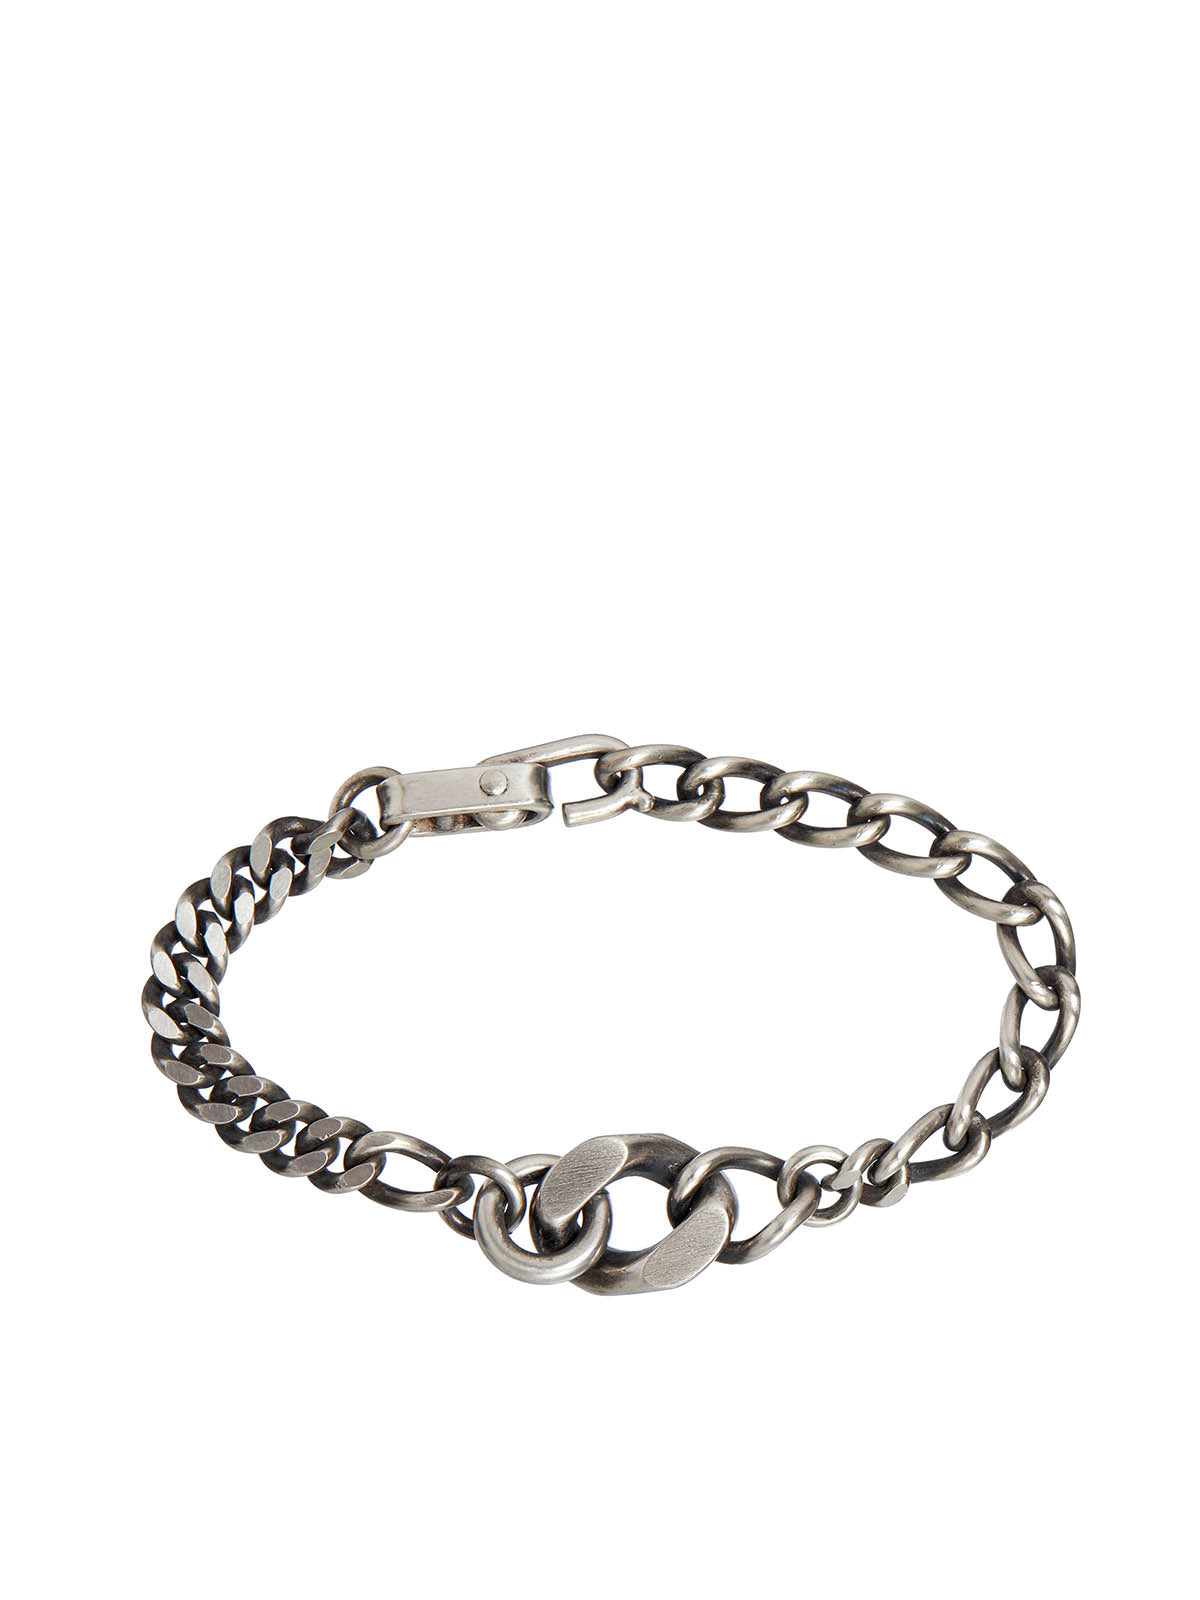 Stylish Silver Chain Bracelet for Men by WERKSTATT:MUNCHEN